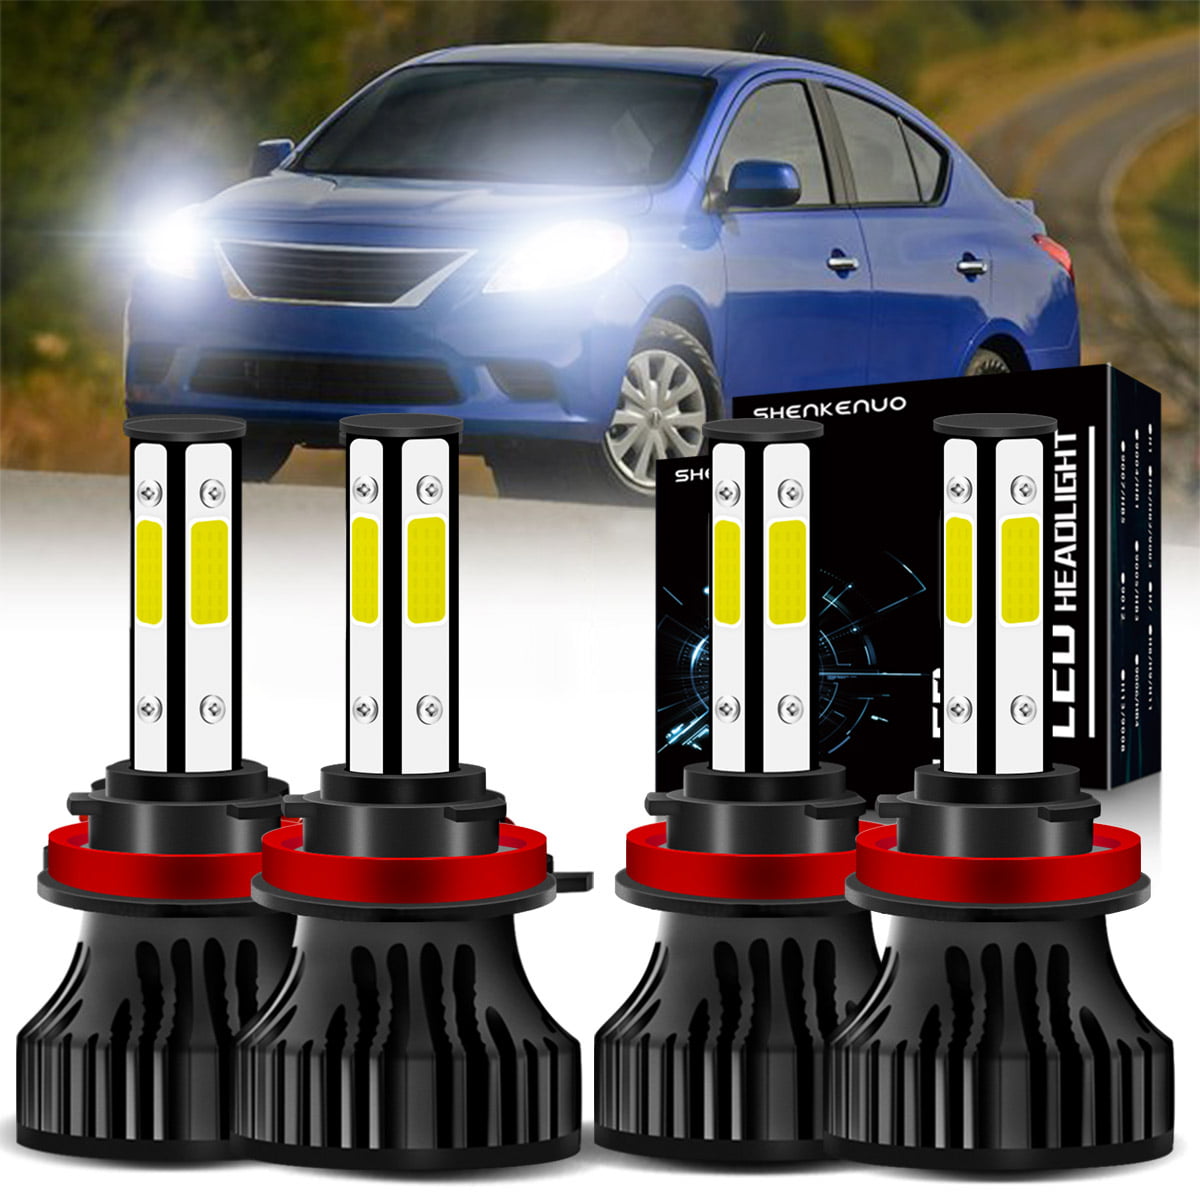 2x Fits Nissan Tiida Genuine Osram Cool Blue Side Light Parking Beam Lamp Bulbs 